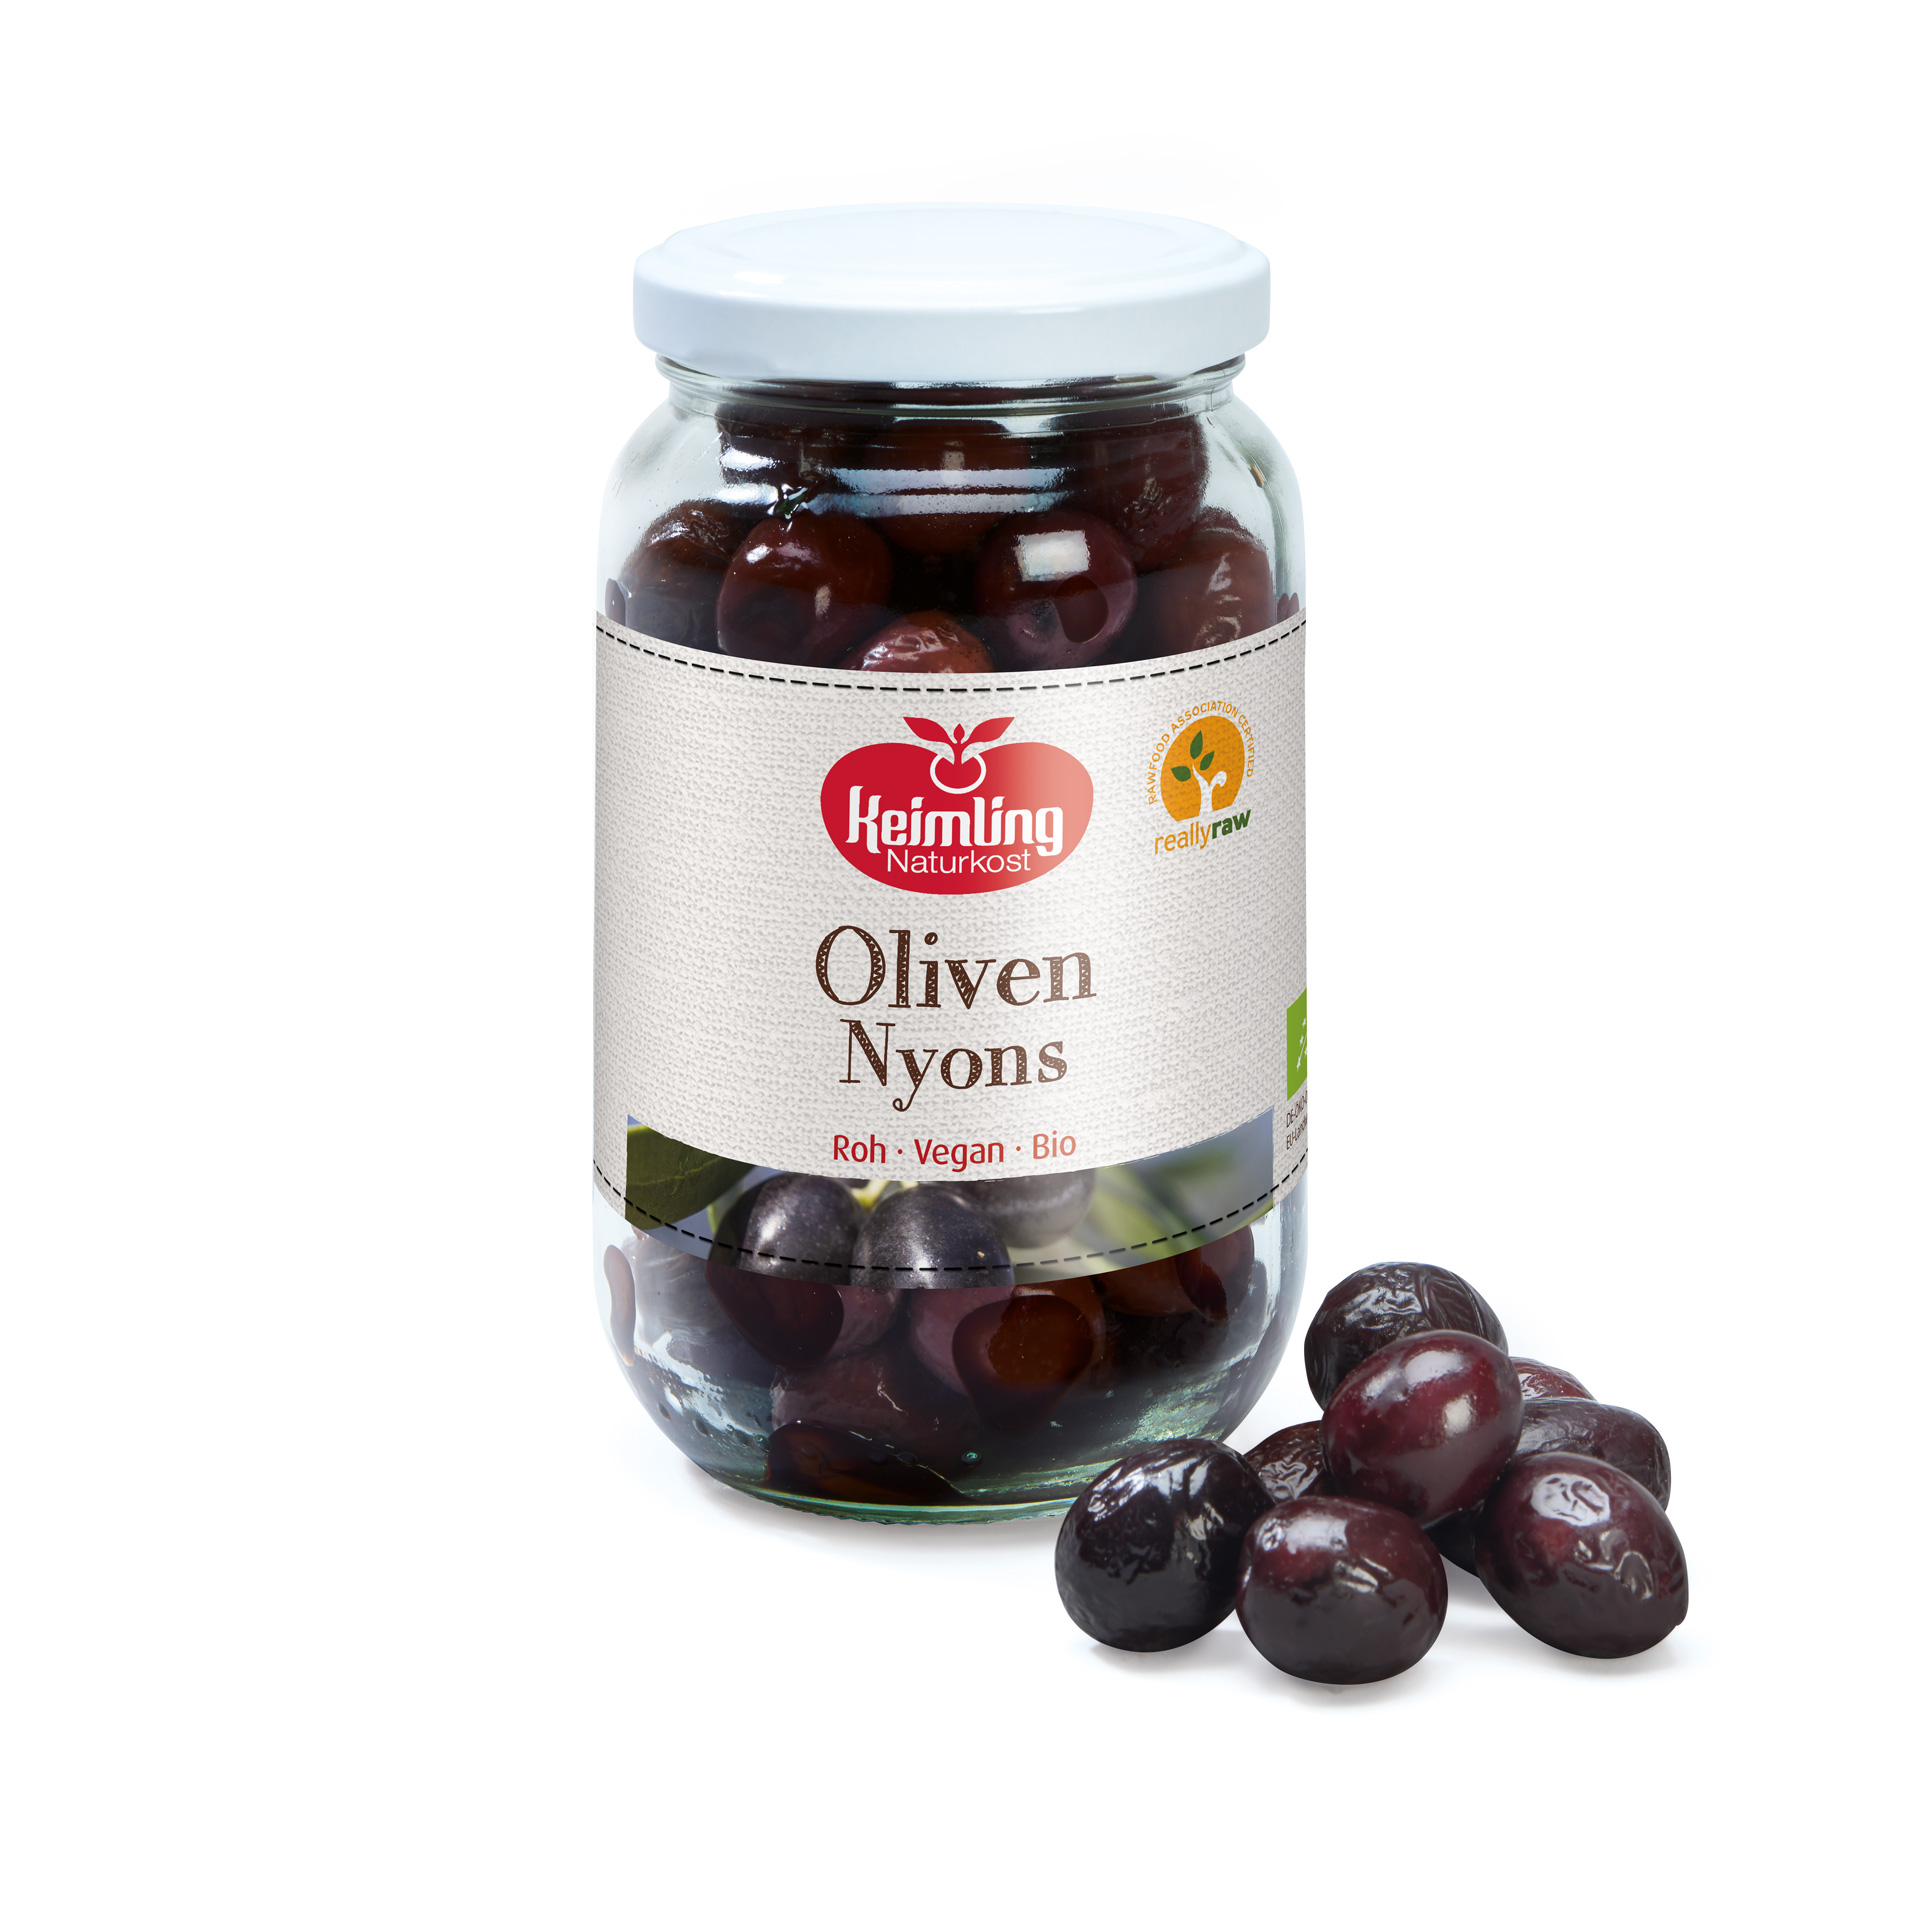 Oliven Nyons von Keimling NAturkost, really-raw zertifiziert